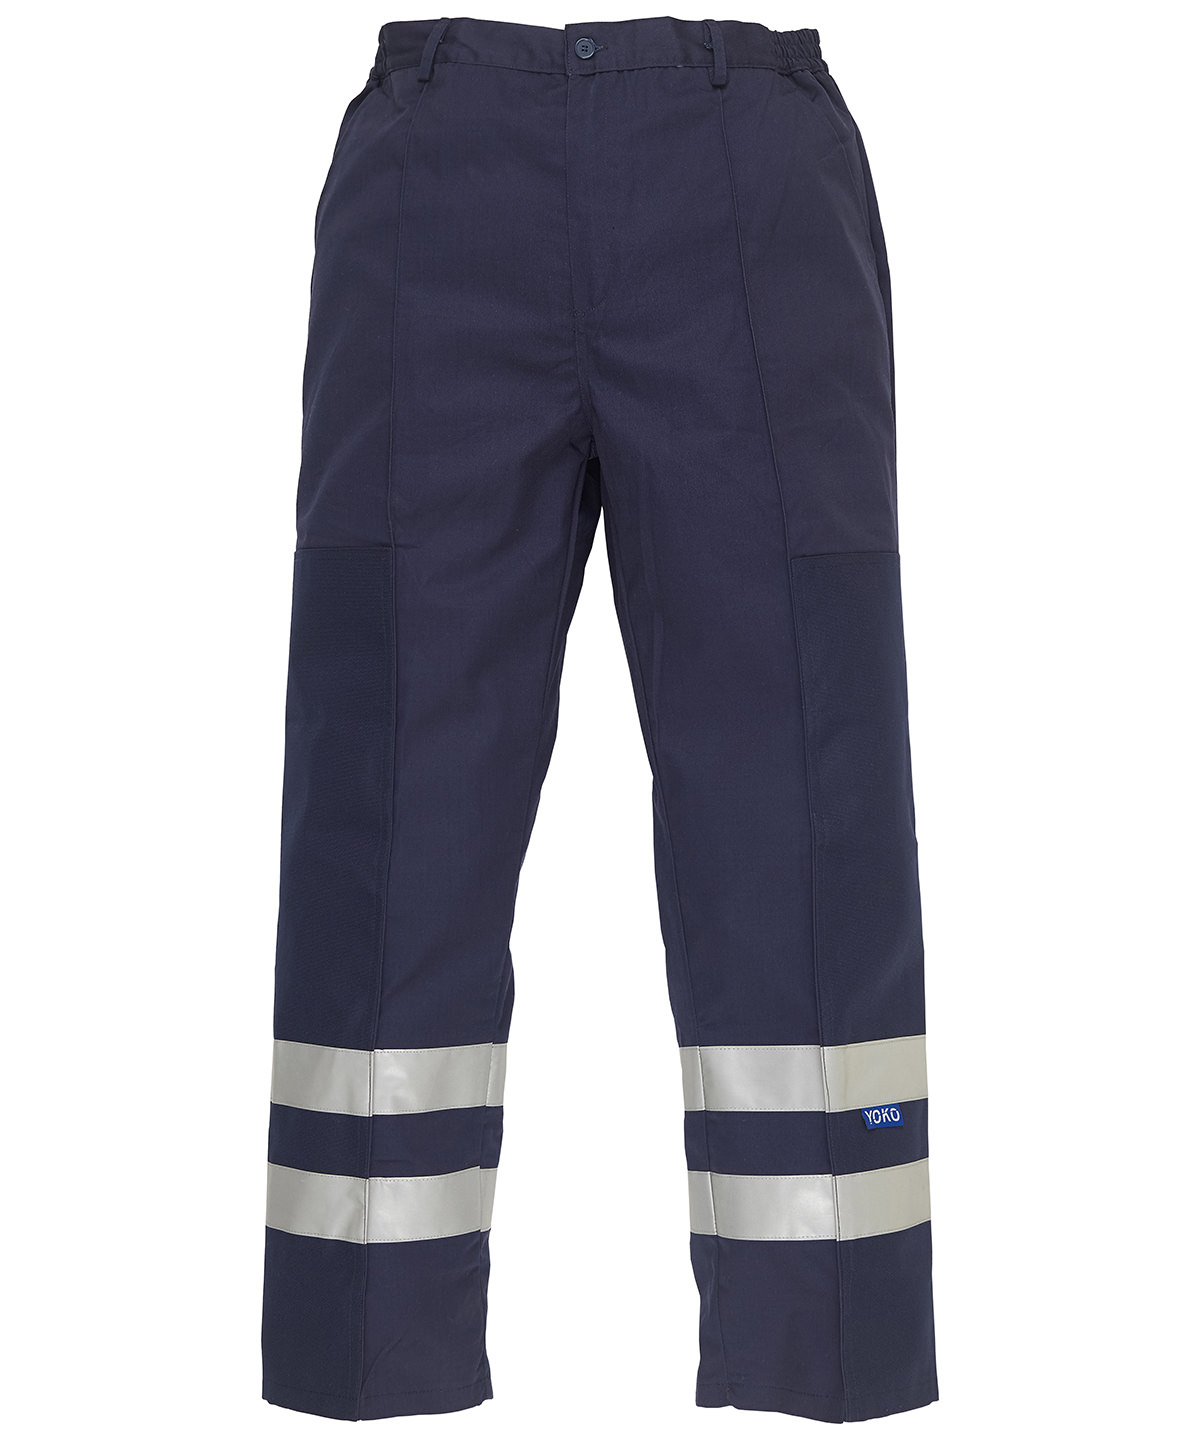 Reflective Polycotton Ballistic Trousers (Bs015T) Navy Size 40Large